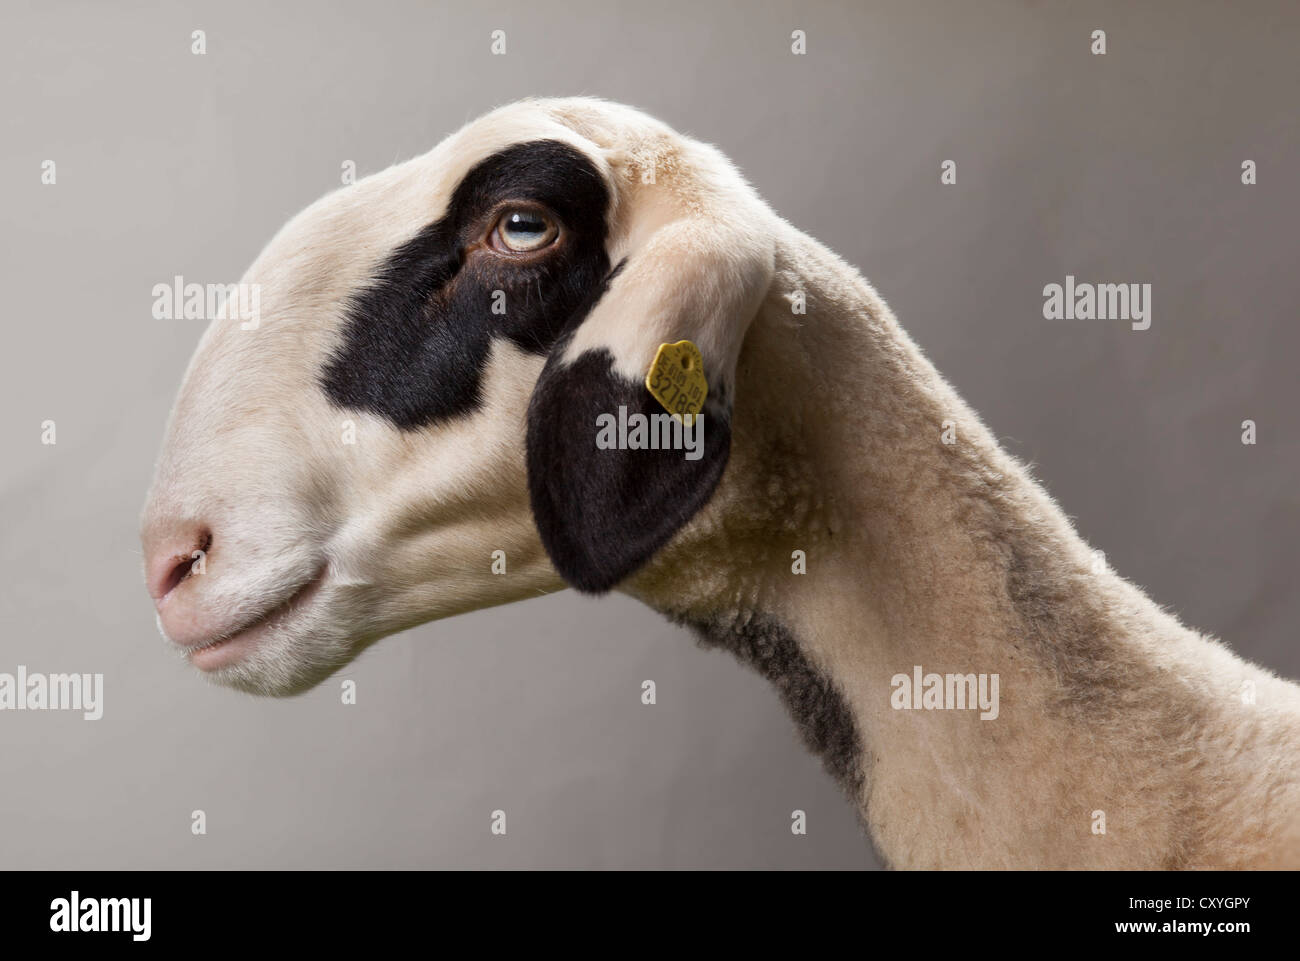 Sheep, portrait Stock Photo